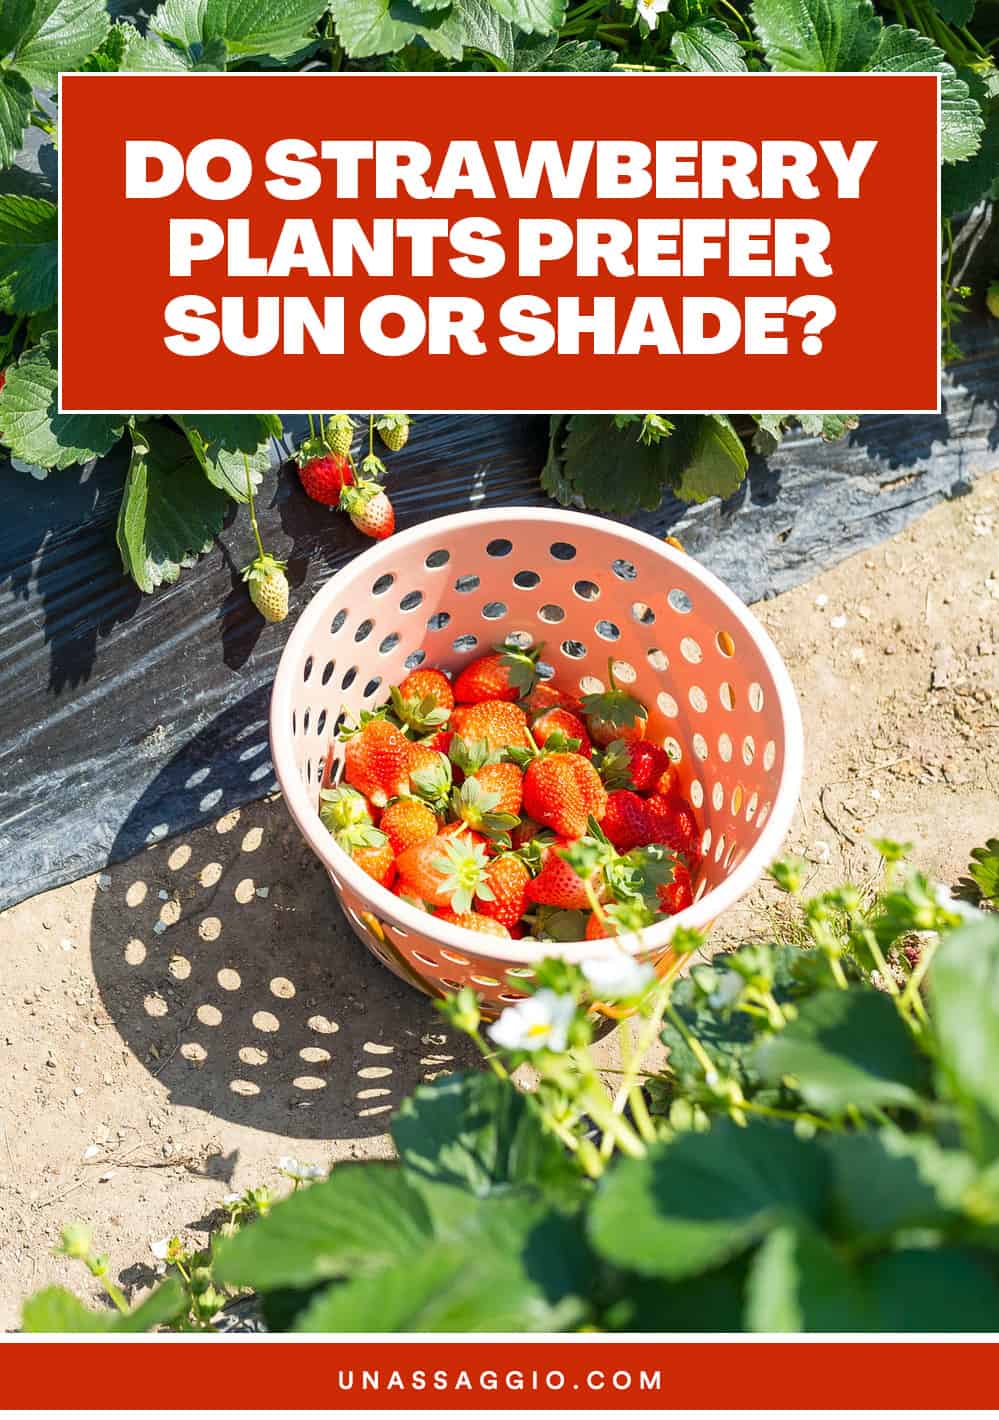 Do strawberries prefer sun or shade?